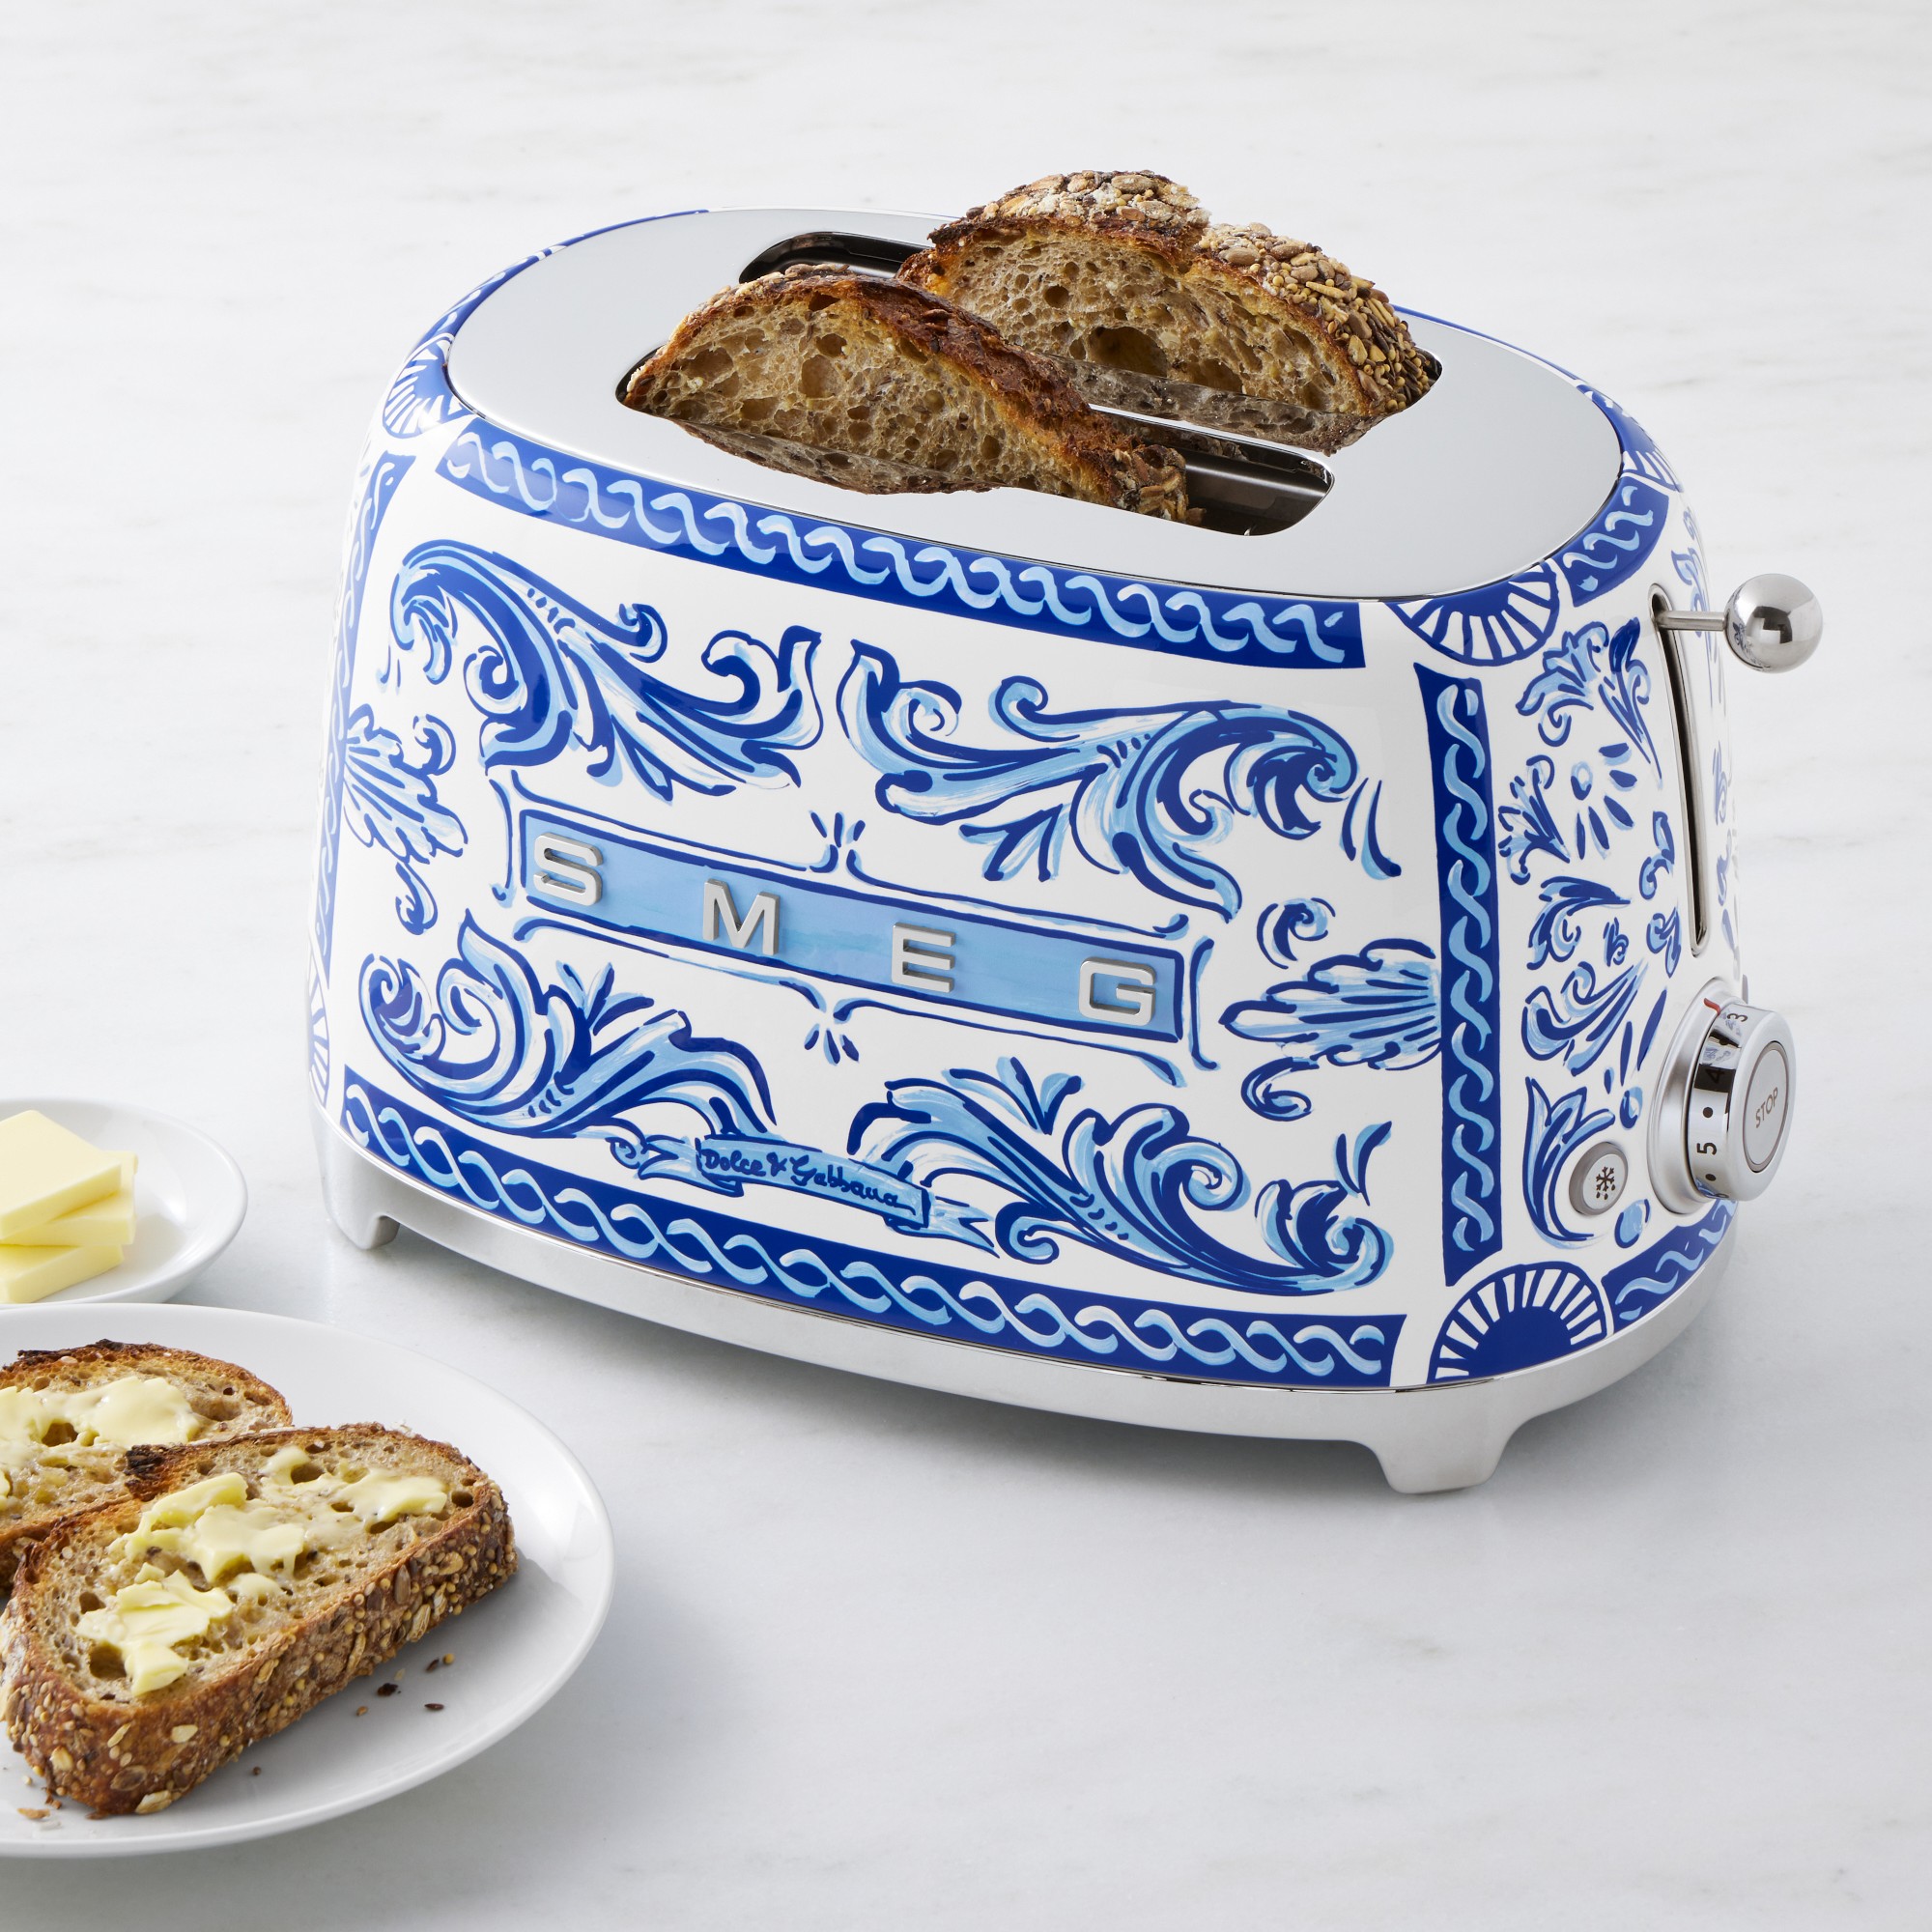 SMEG Dolce & Gabbana 2-Slice Toaster